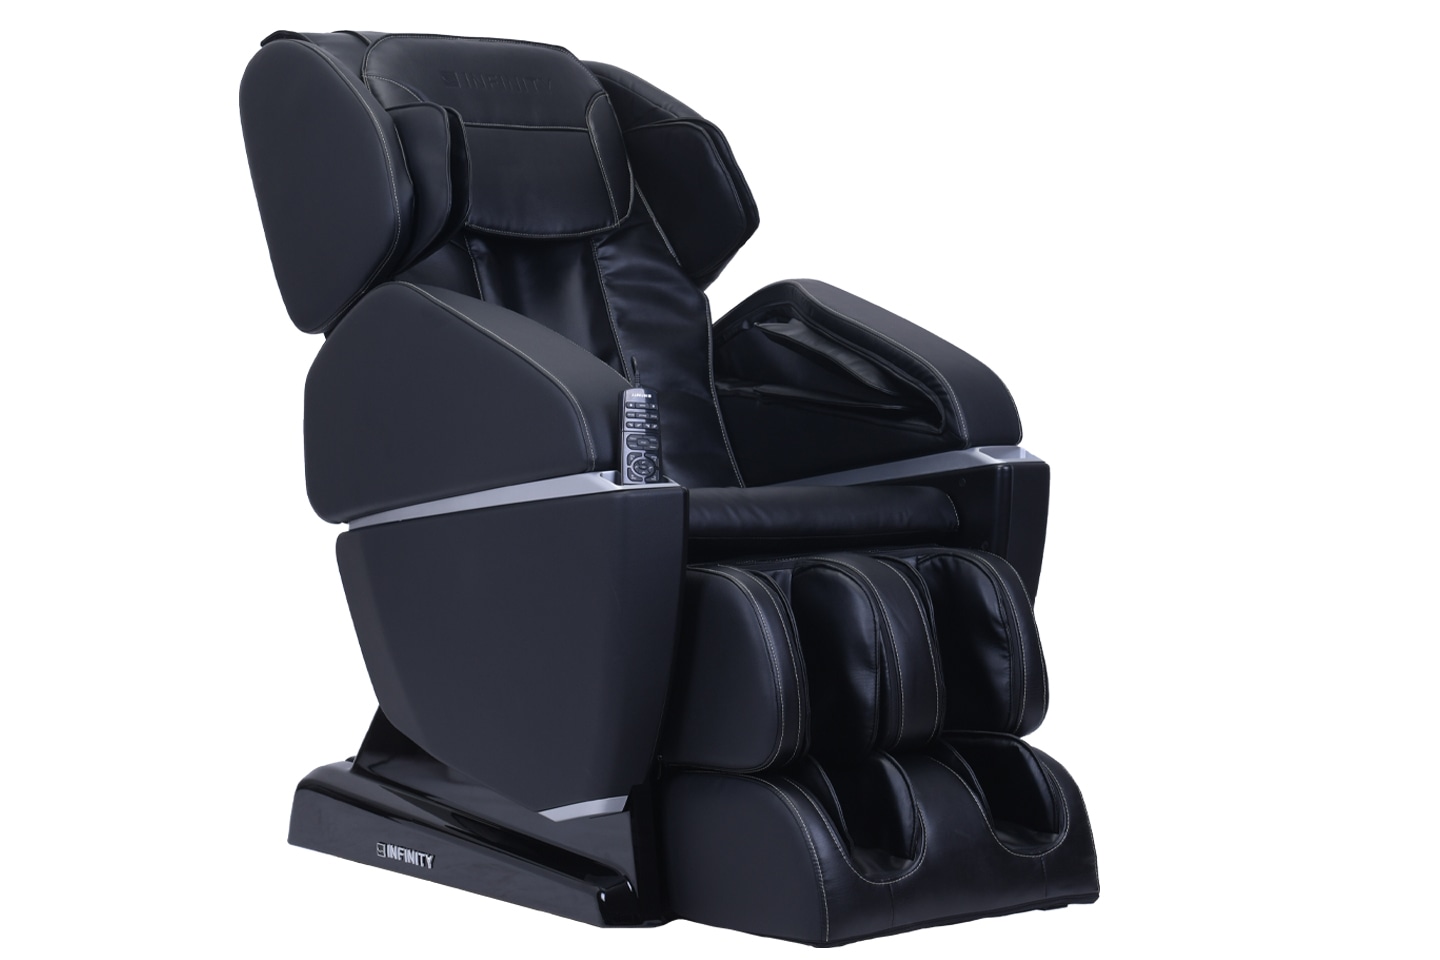 Prelude™ Massage Chair